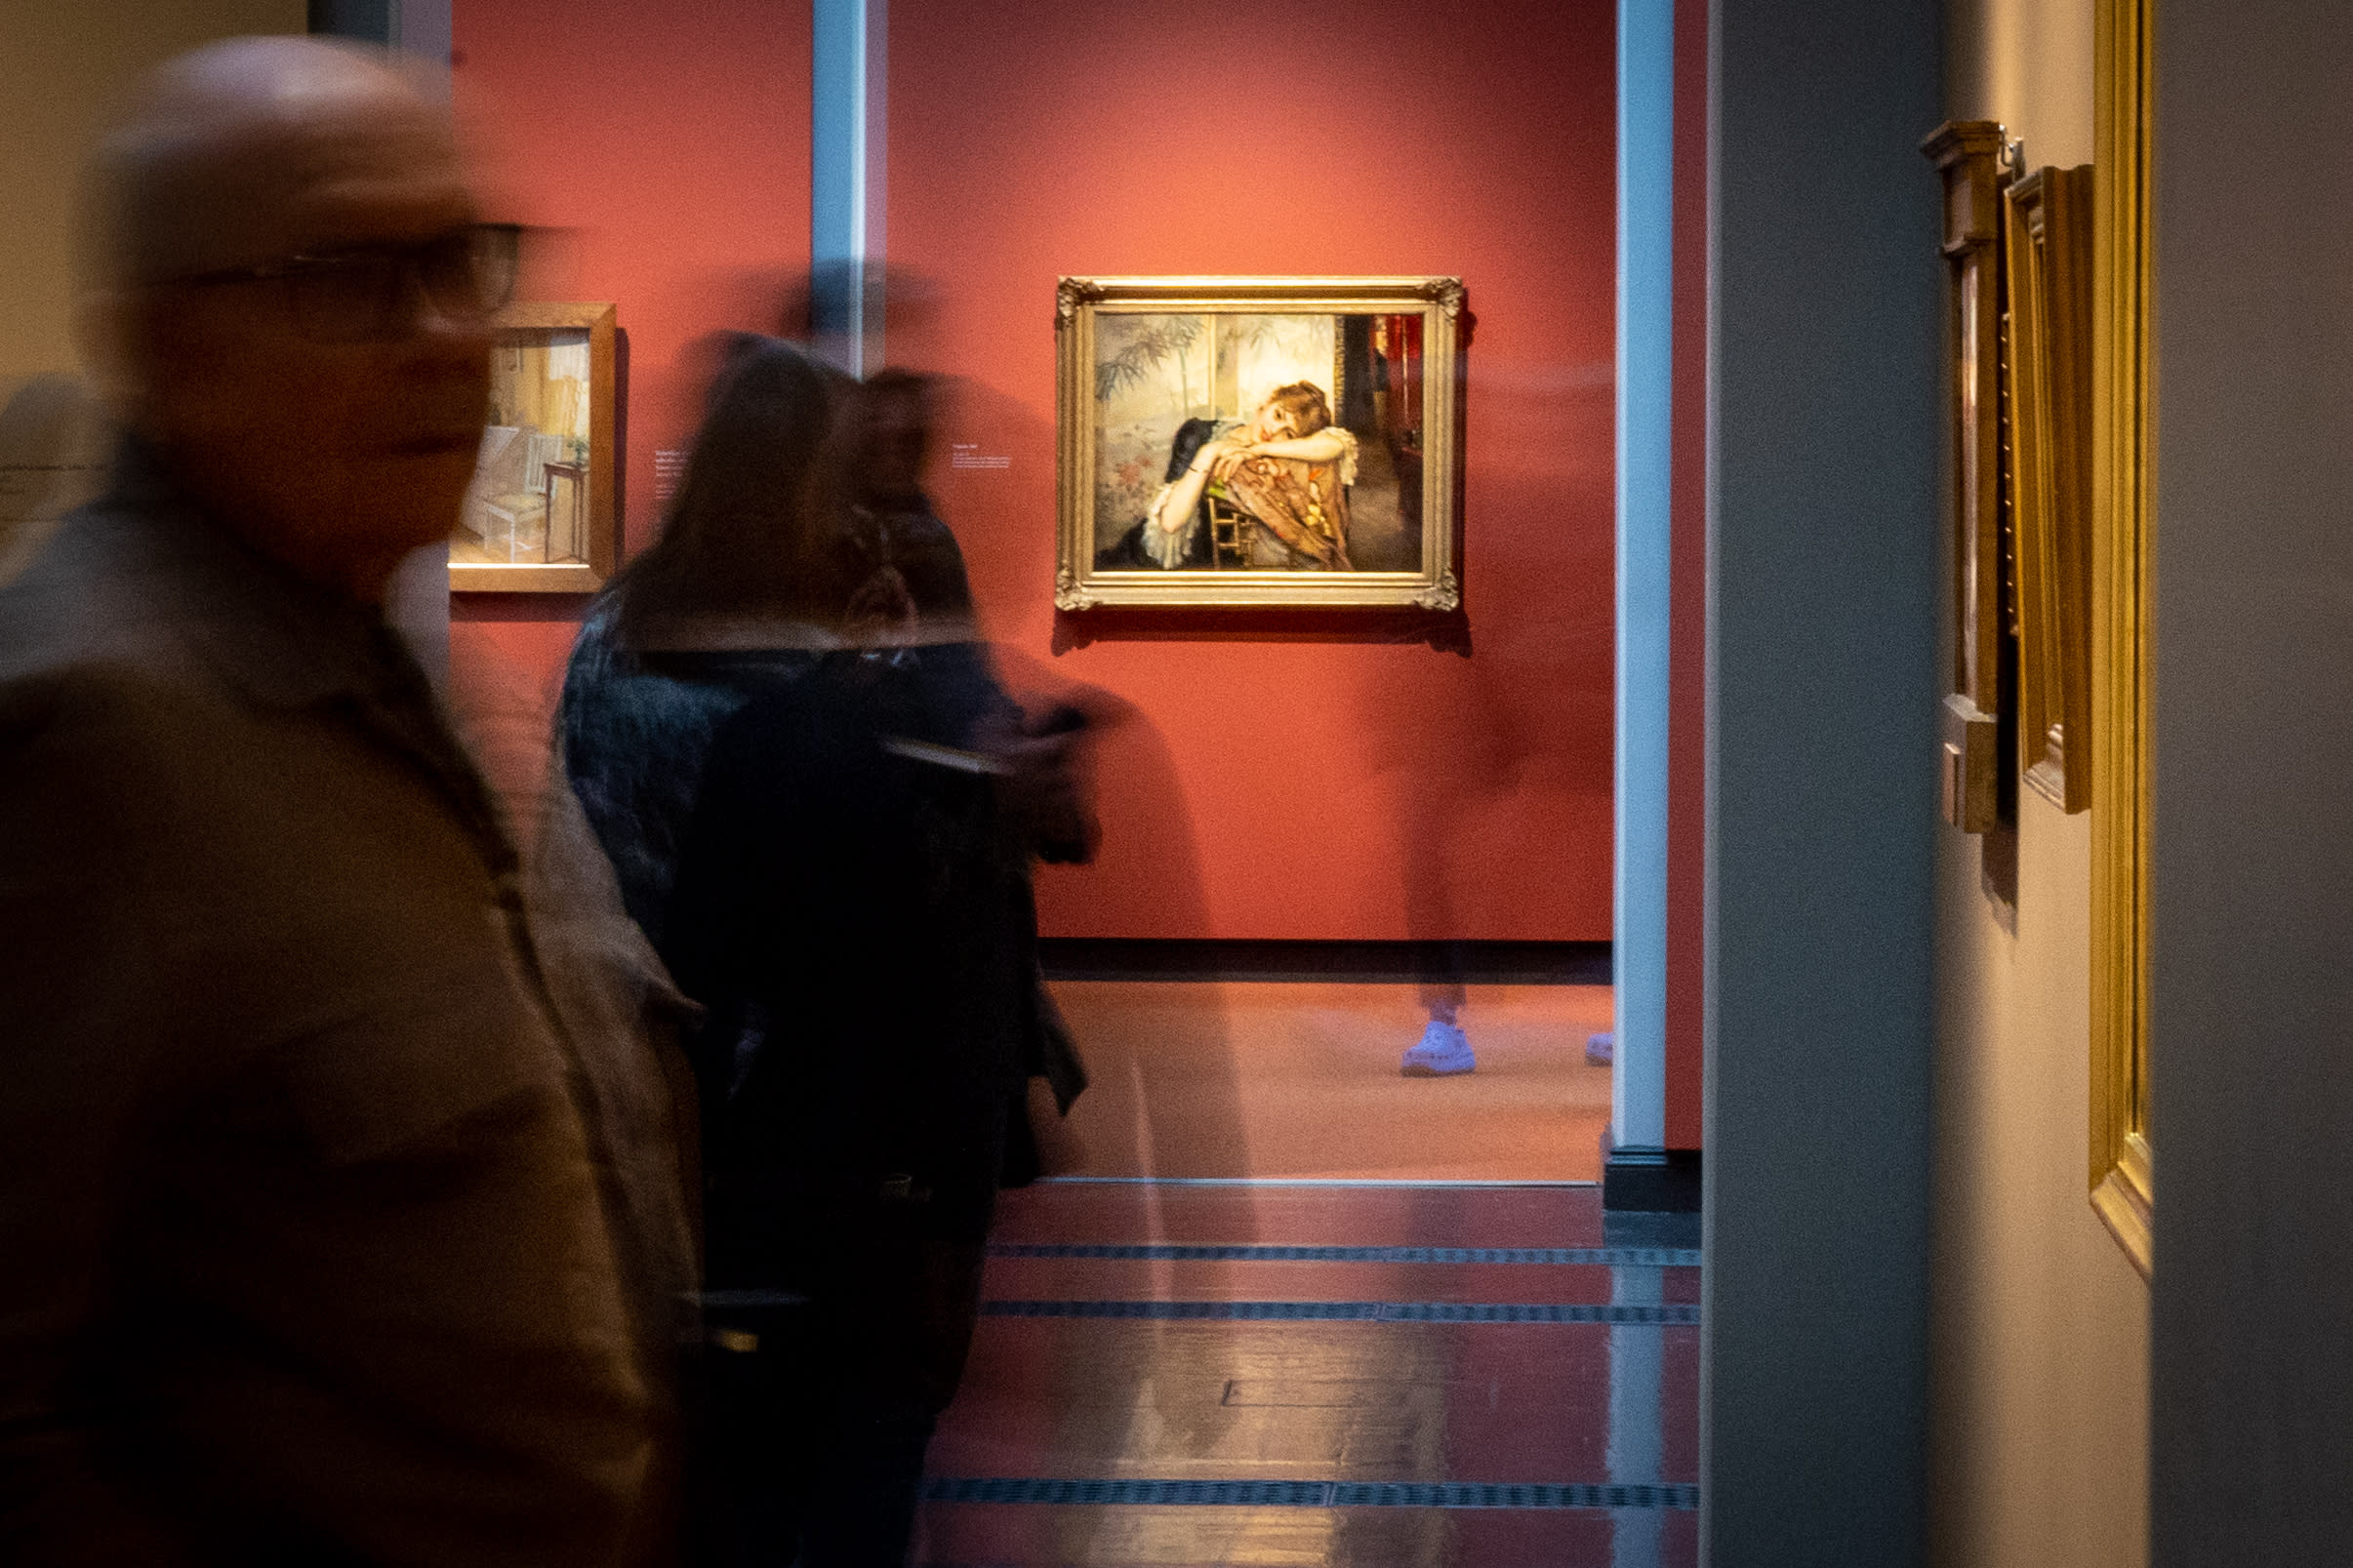 The Edelfelt exhibition broke Ateneum’s visitor records